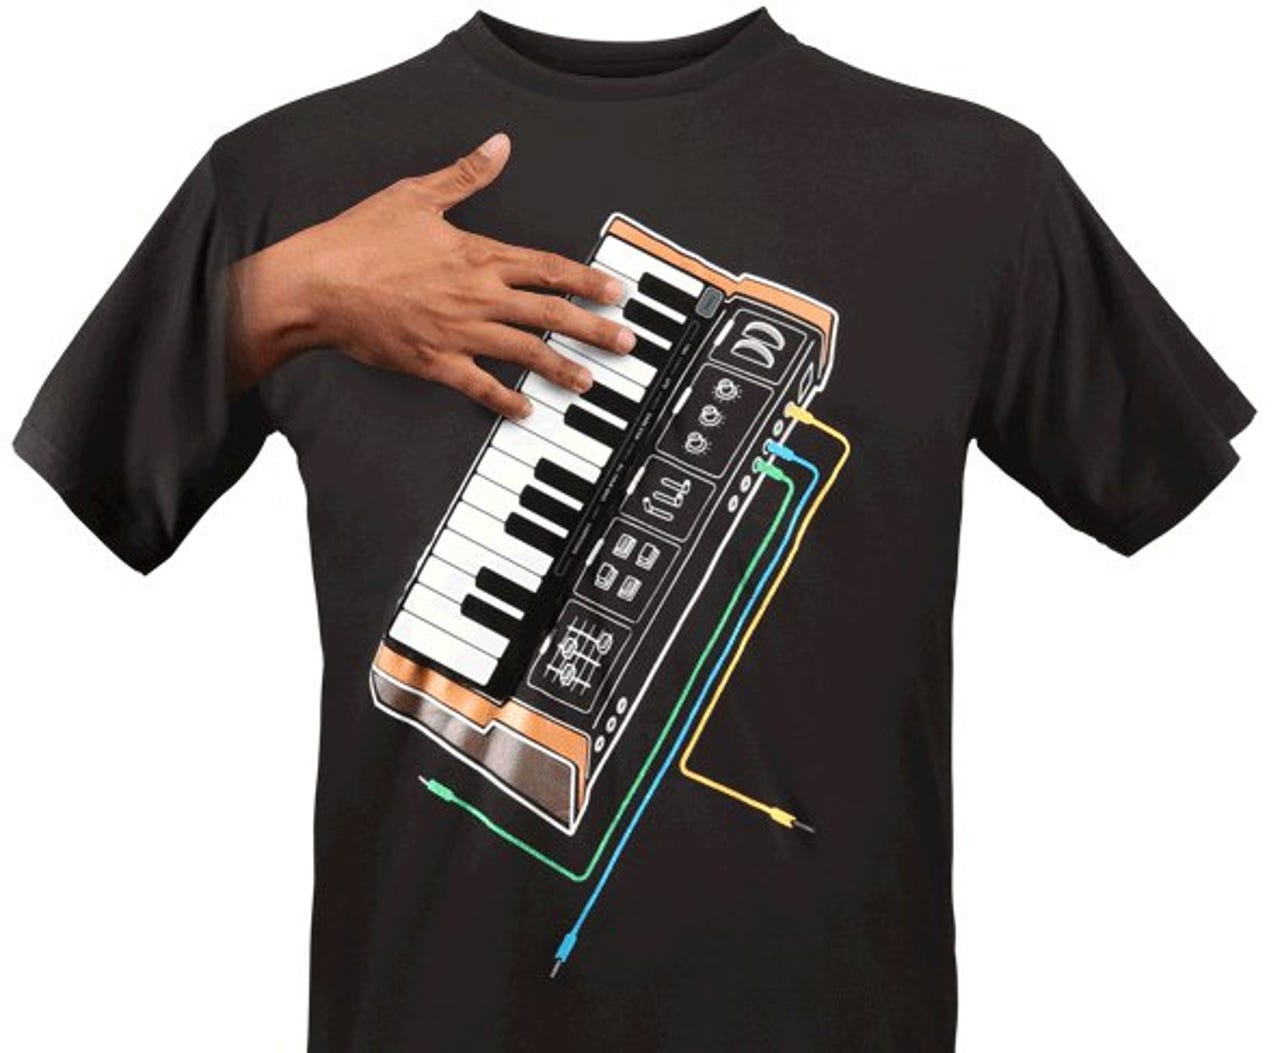 40153921-6-keyboard-t-shirt.jpg